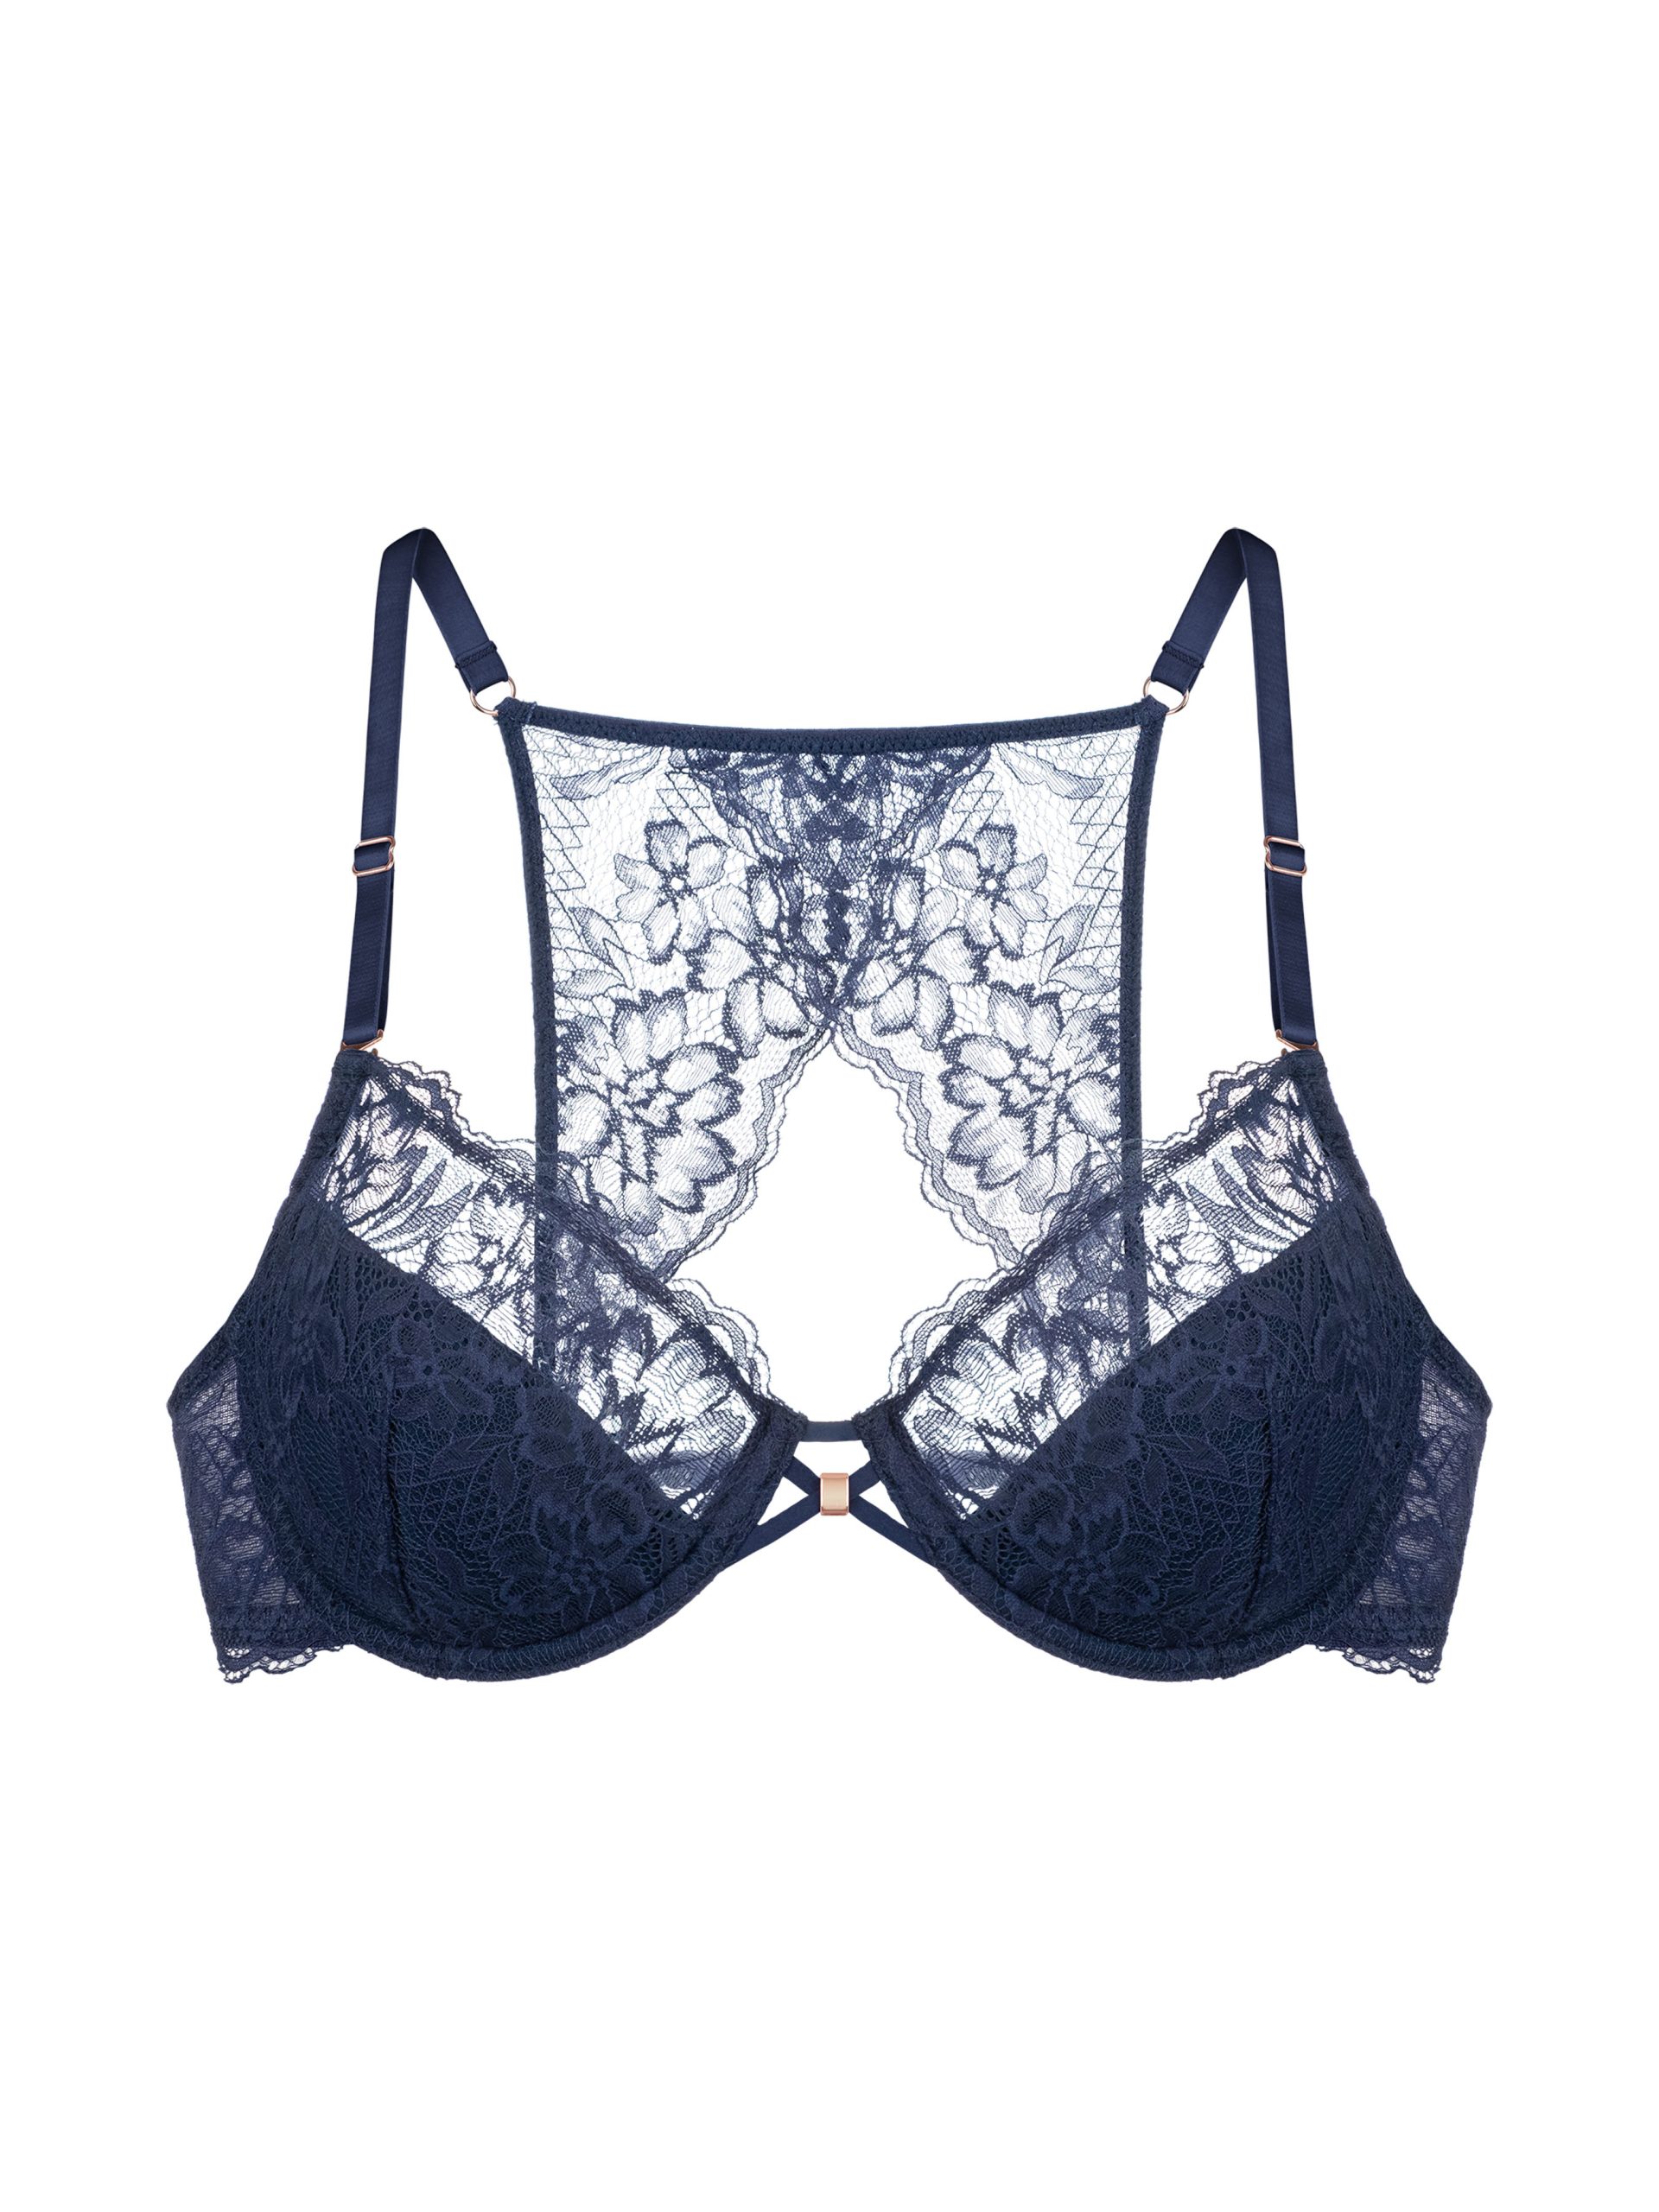 MRULIC lingerie for women Lace New Fashion Dot Mesh Underwear Lingerie Big  Bow Lingerie Brief Navy Blue + XL 